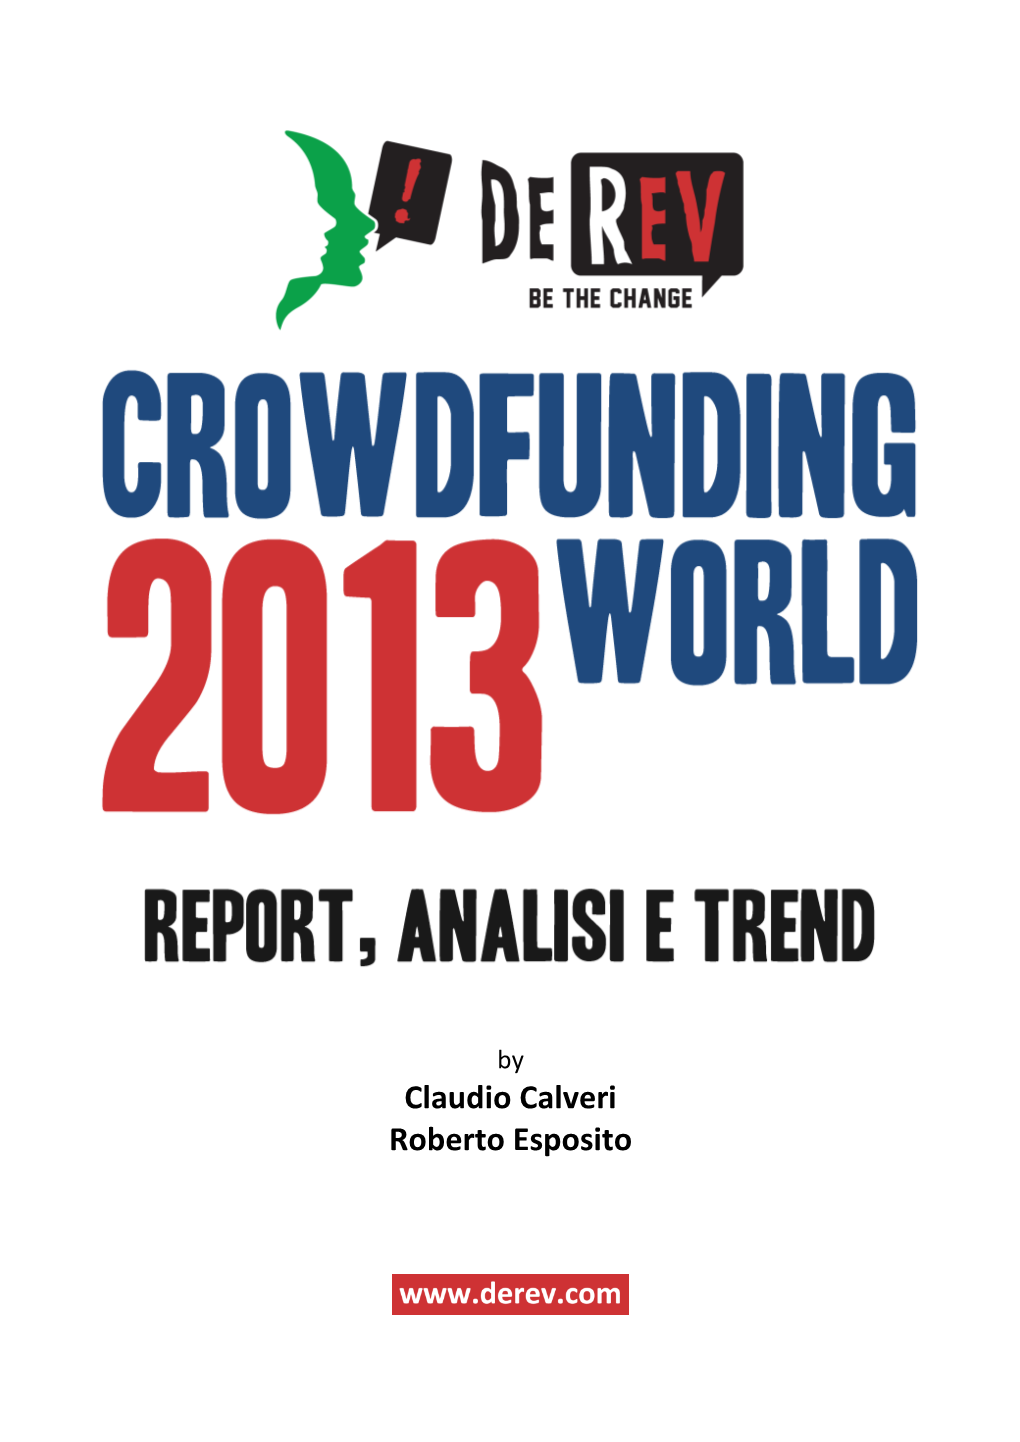 Crowdfunding World 2013: Report, Analisi E Trend